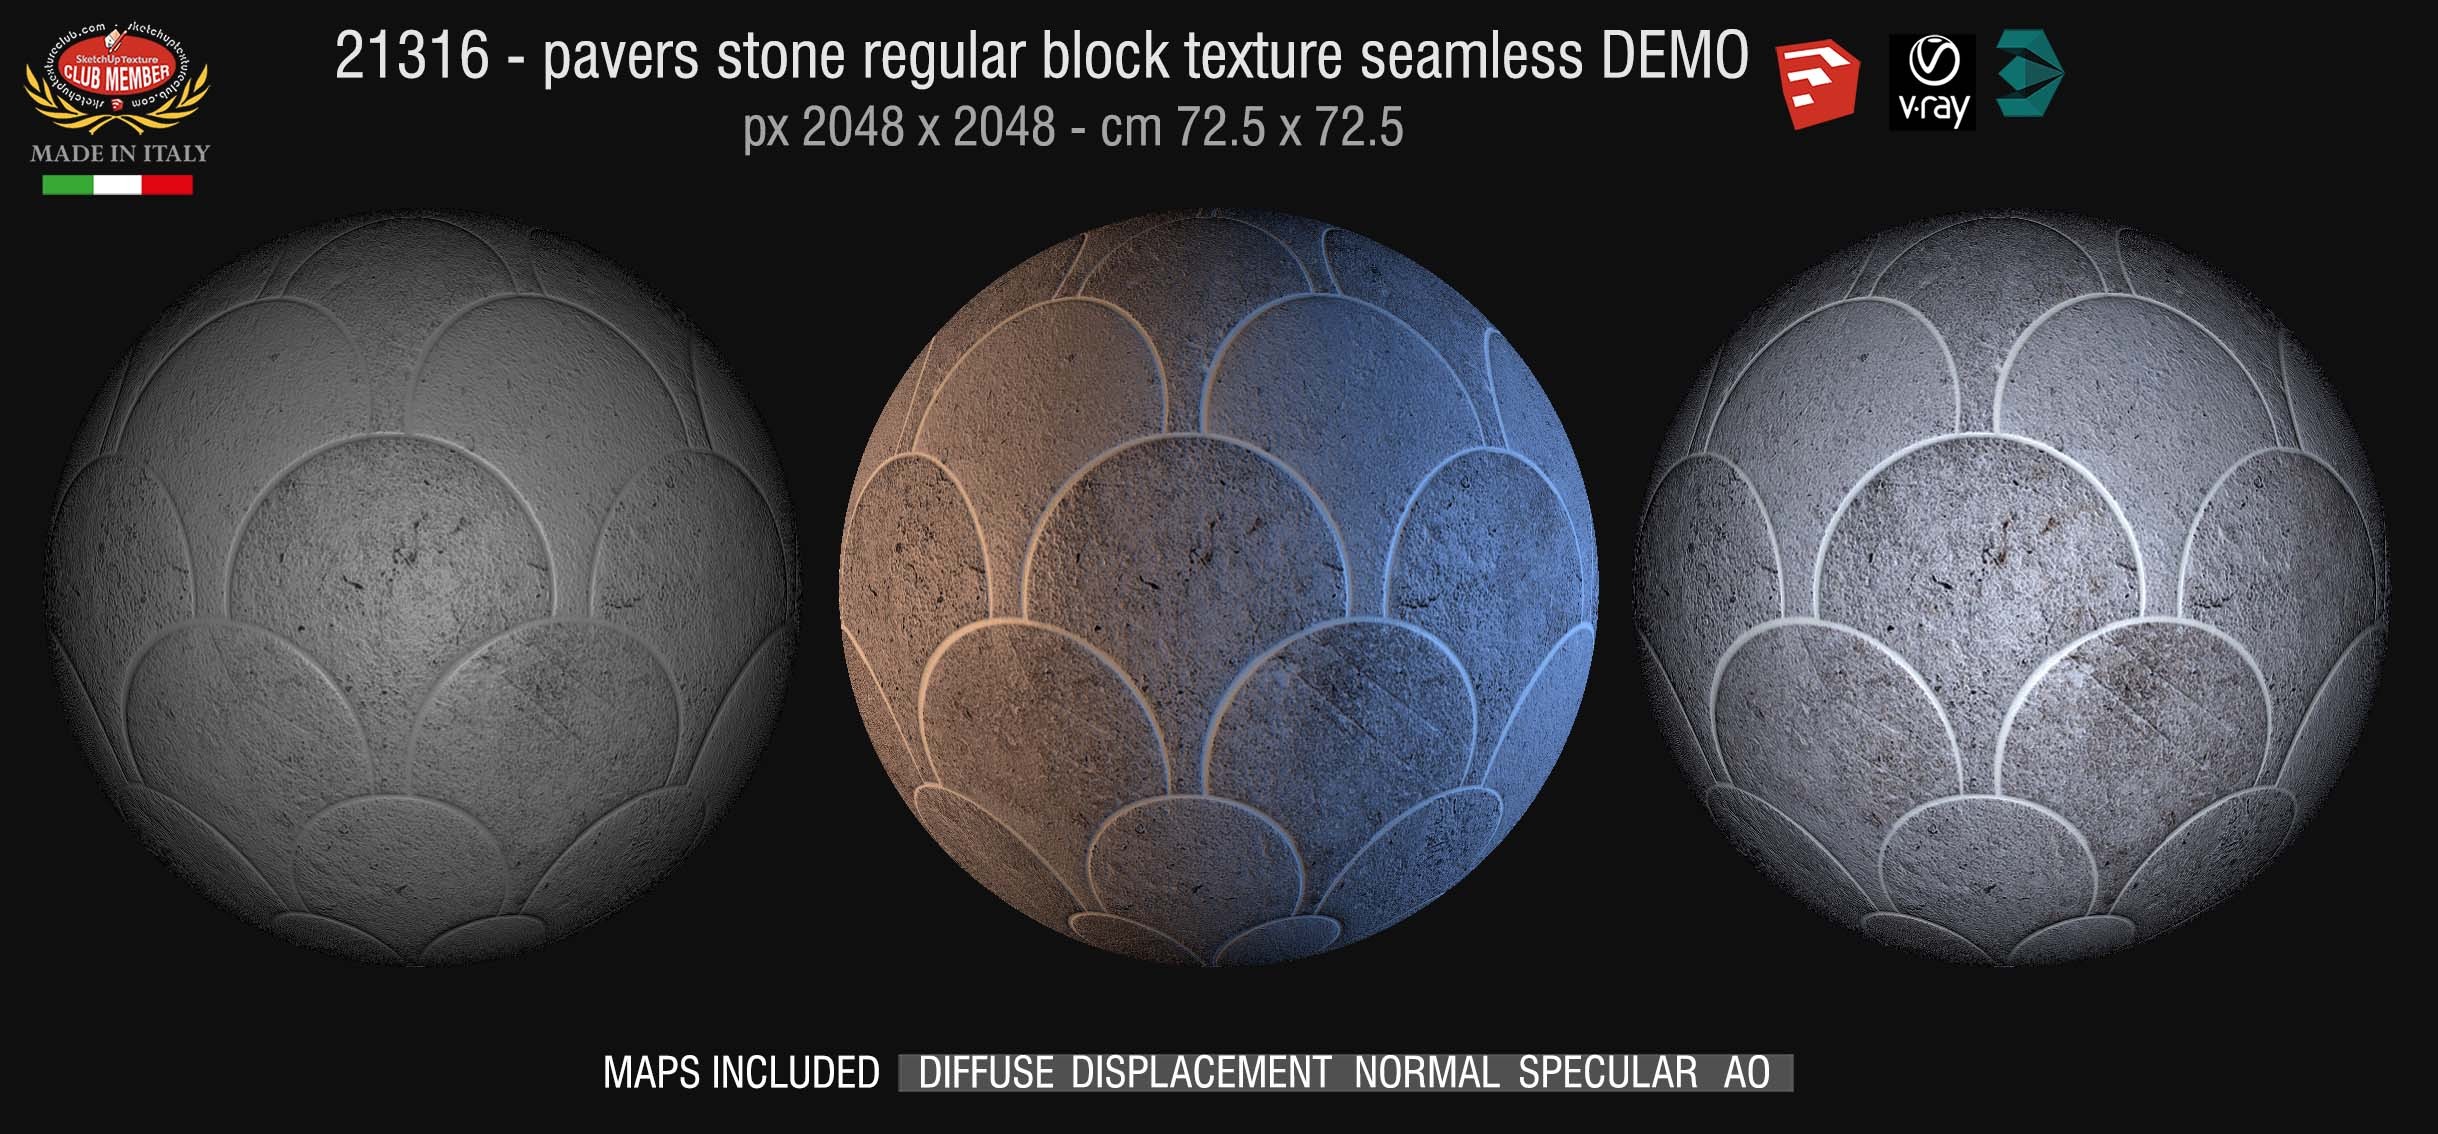 21316 HR Pavers stone regular block texture seamless + maps DEMO